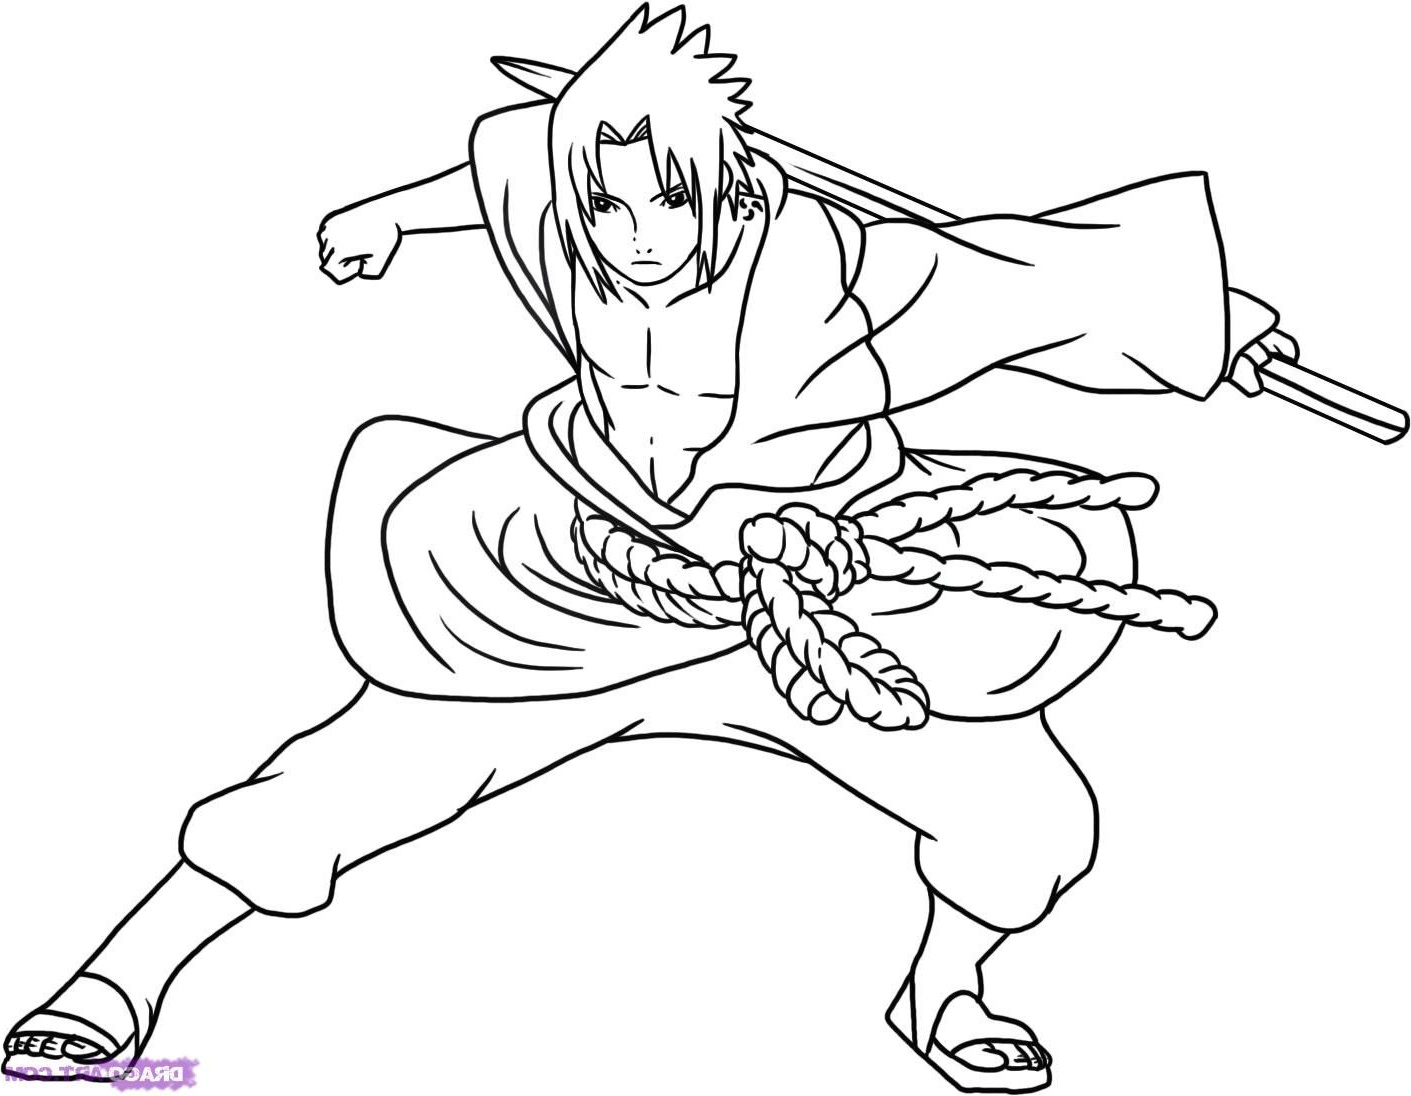 Naruto Dessin Noir Et Blanc Beau Photos Coloriage De Naruto A Imprimer Et Colorier